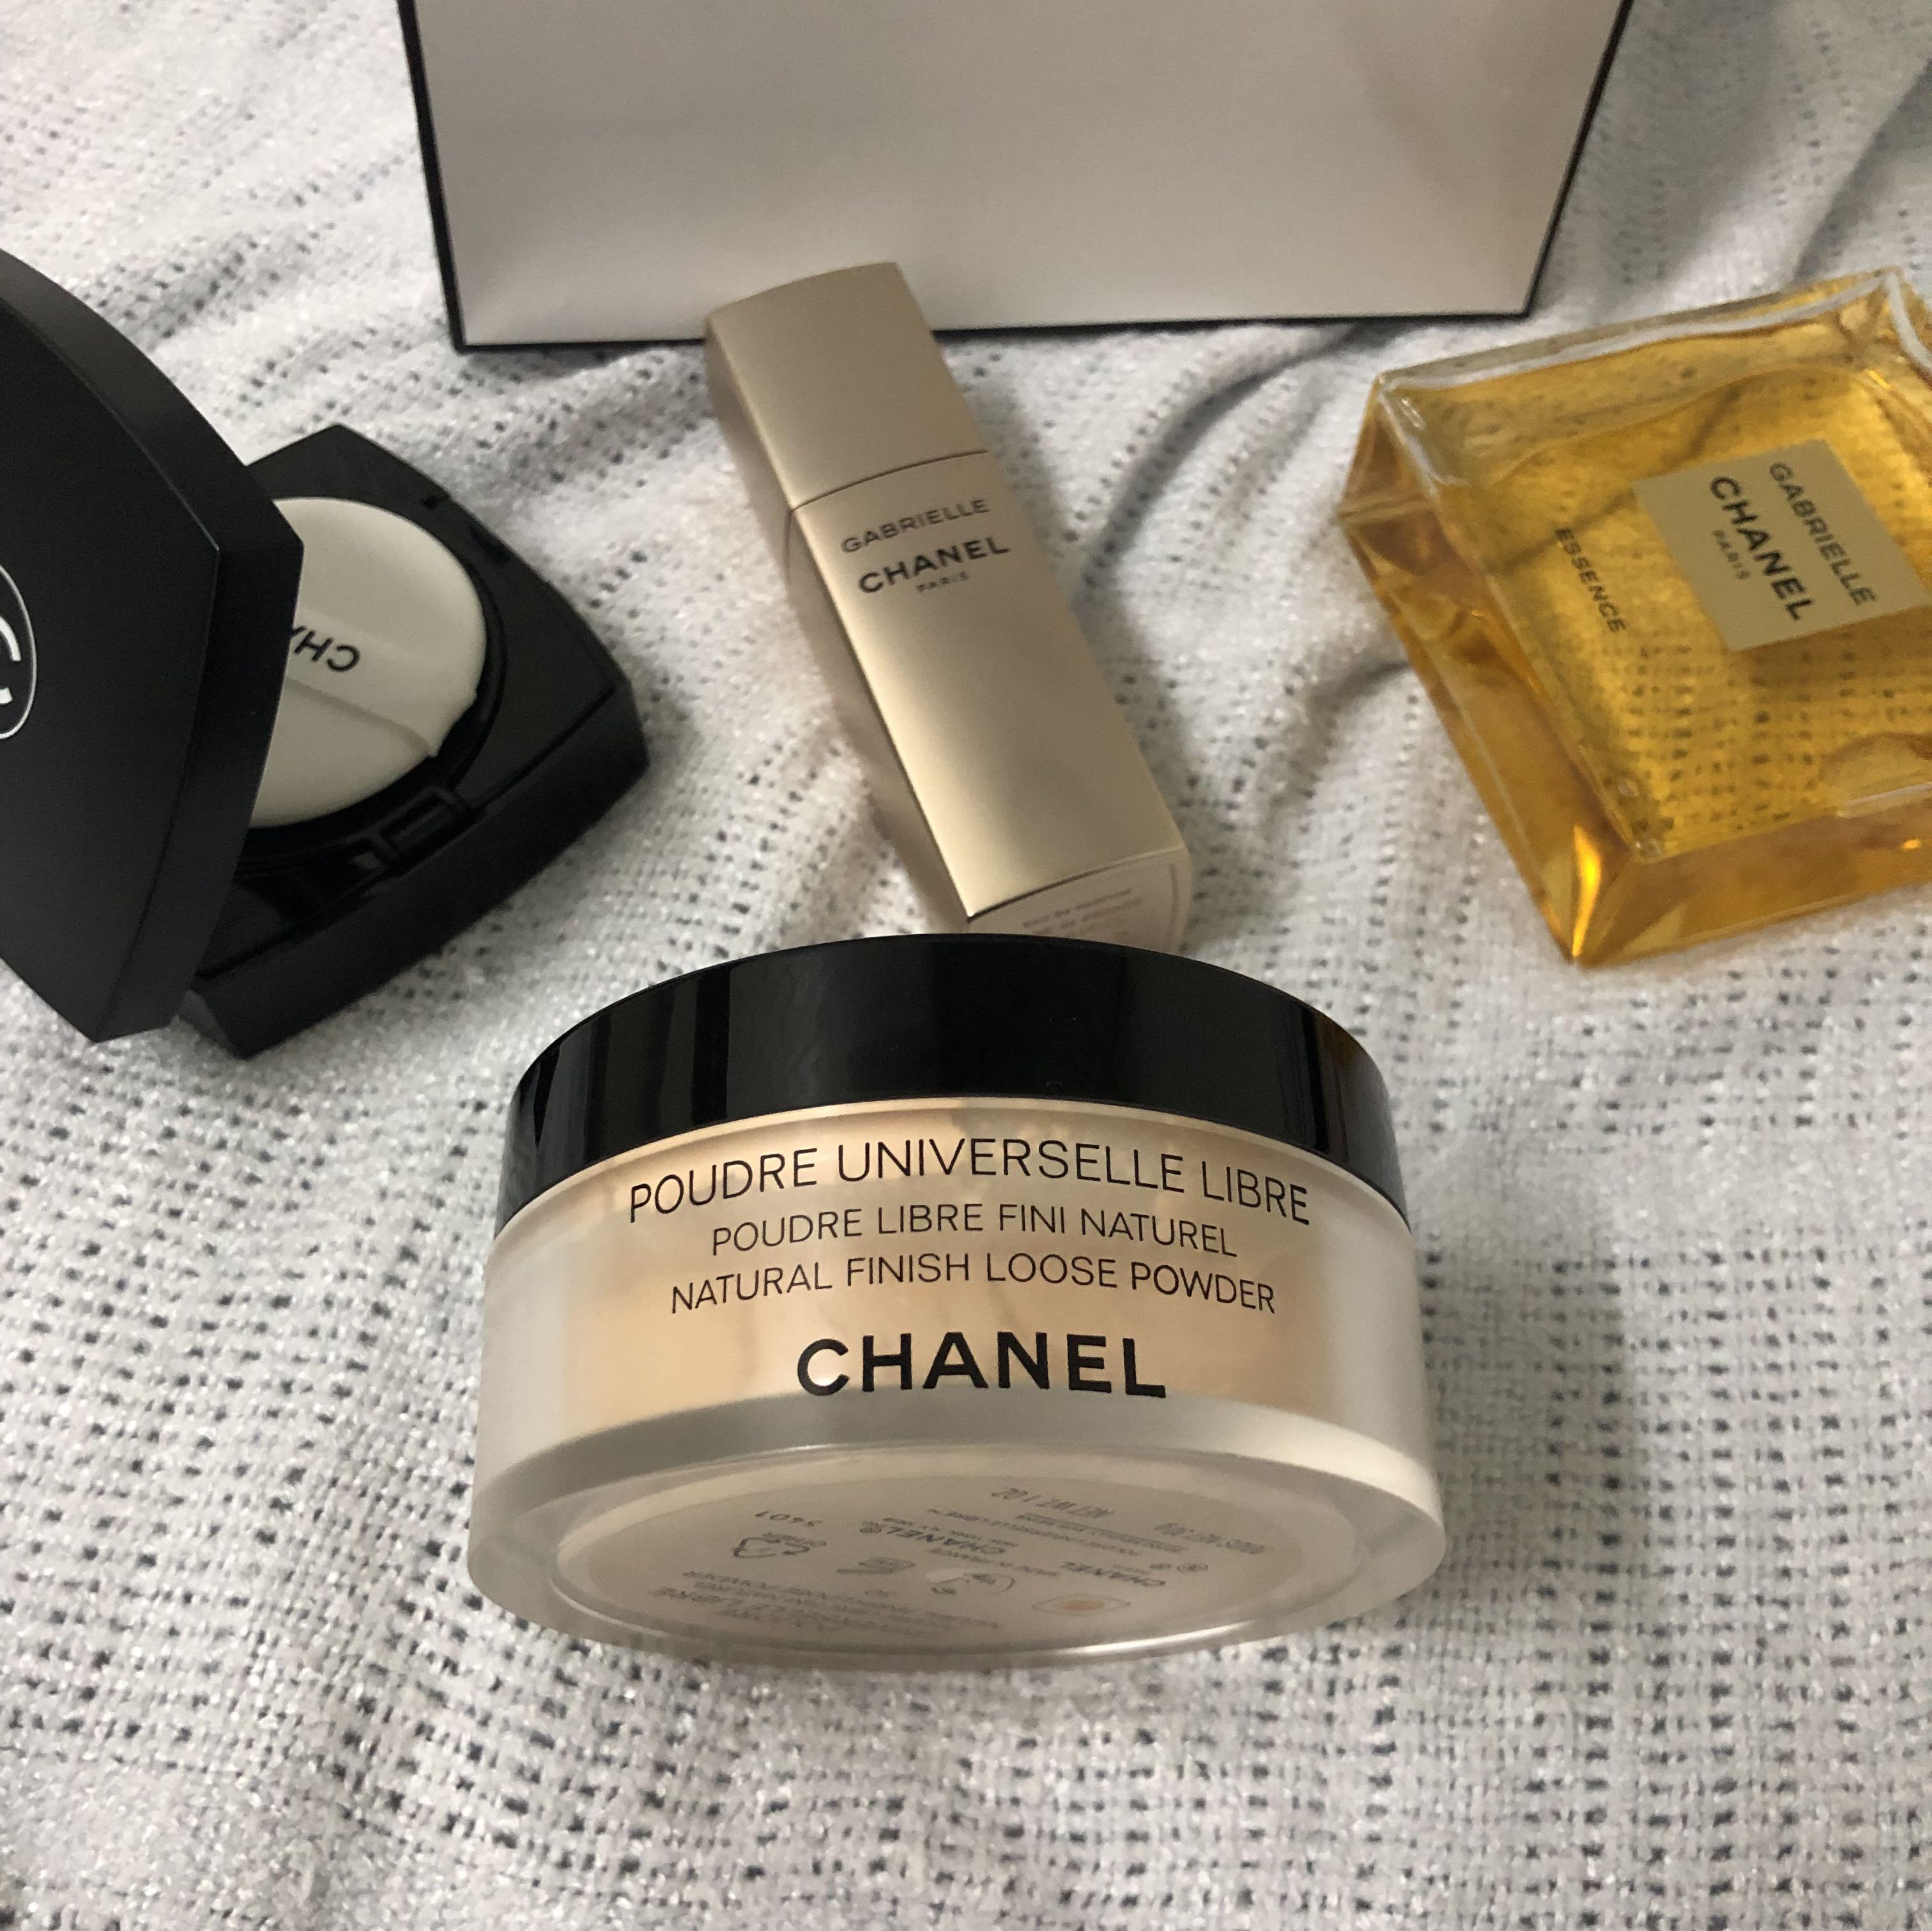 Chanel loose powder